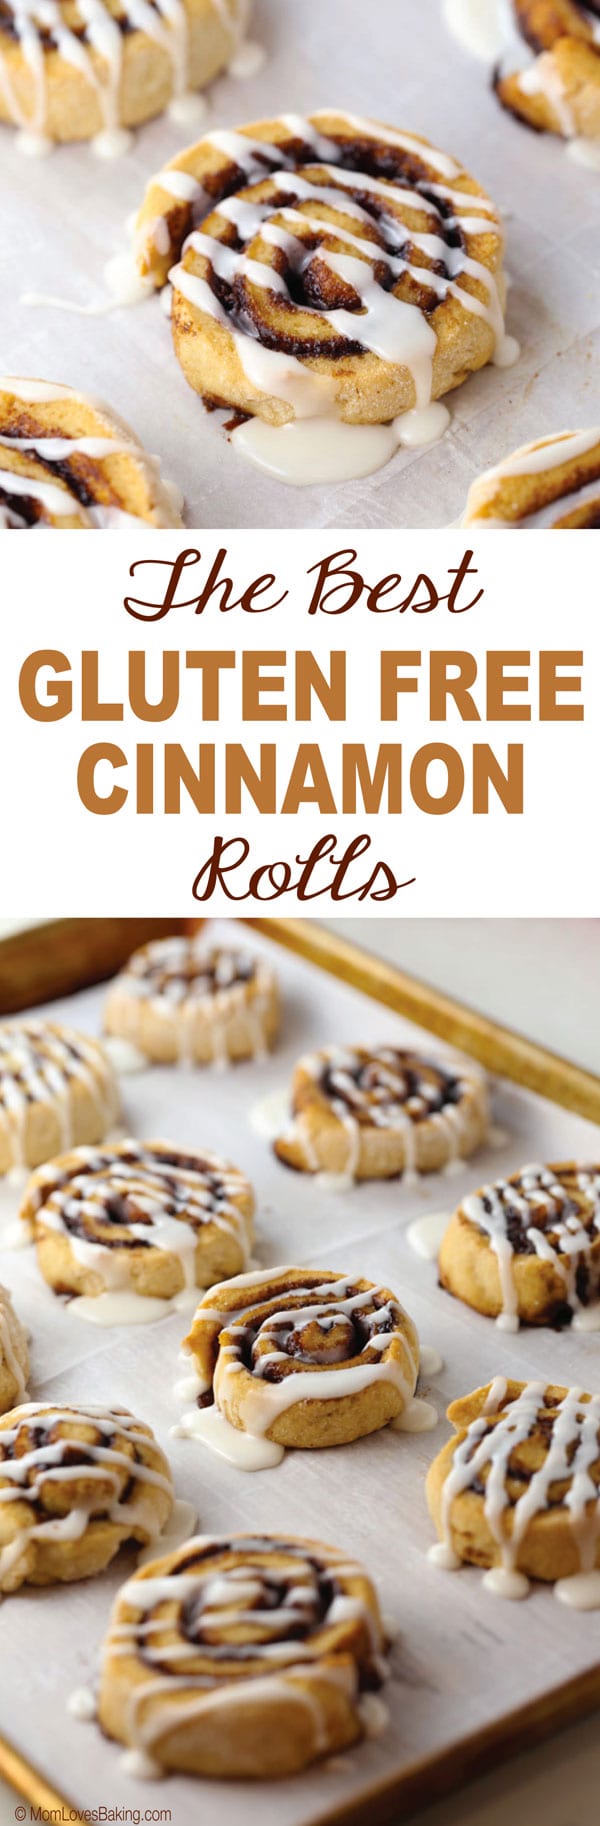 The best gluten free cinnamon rolls